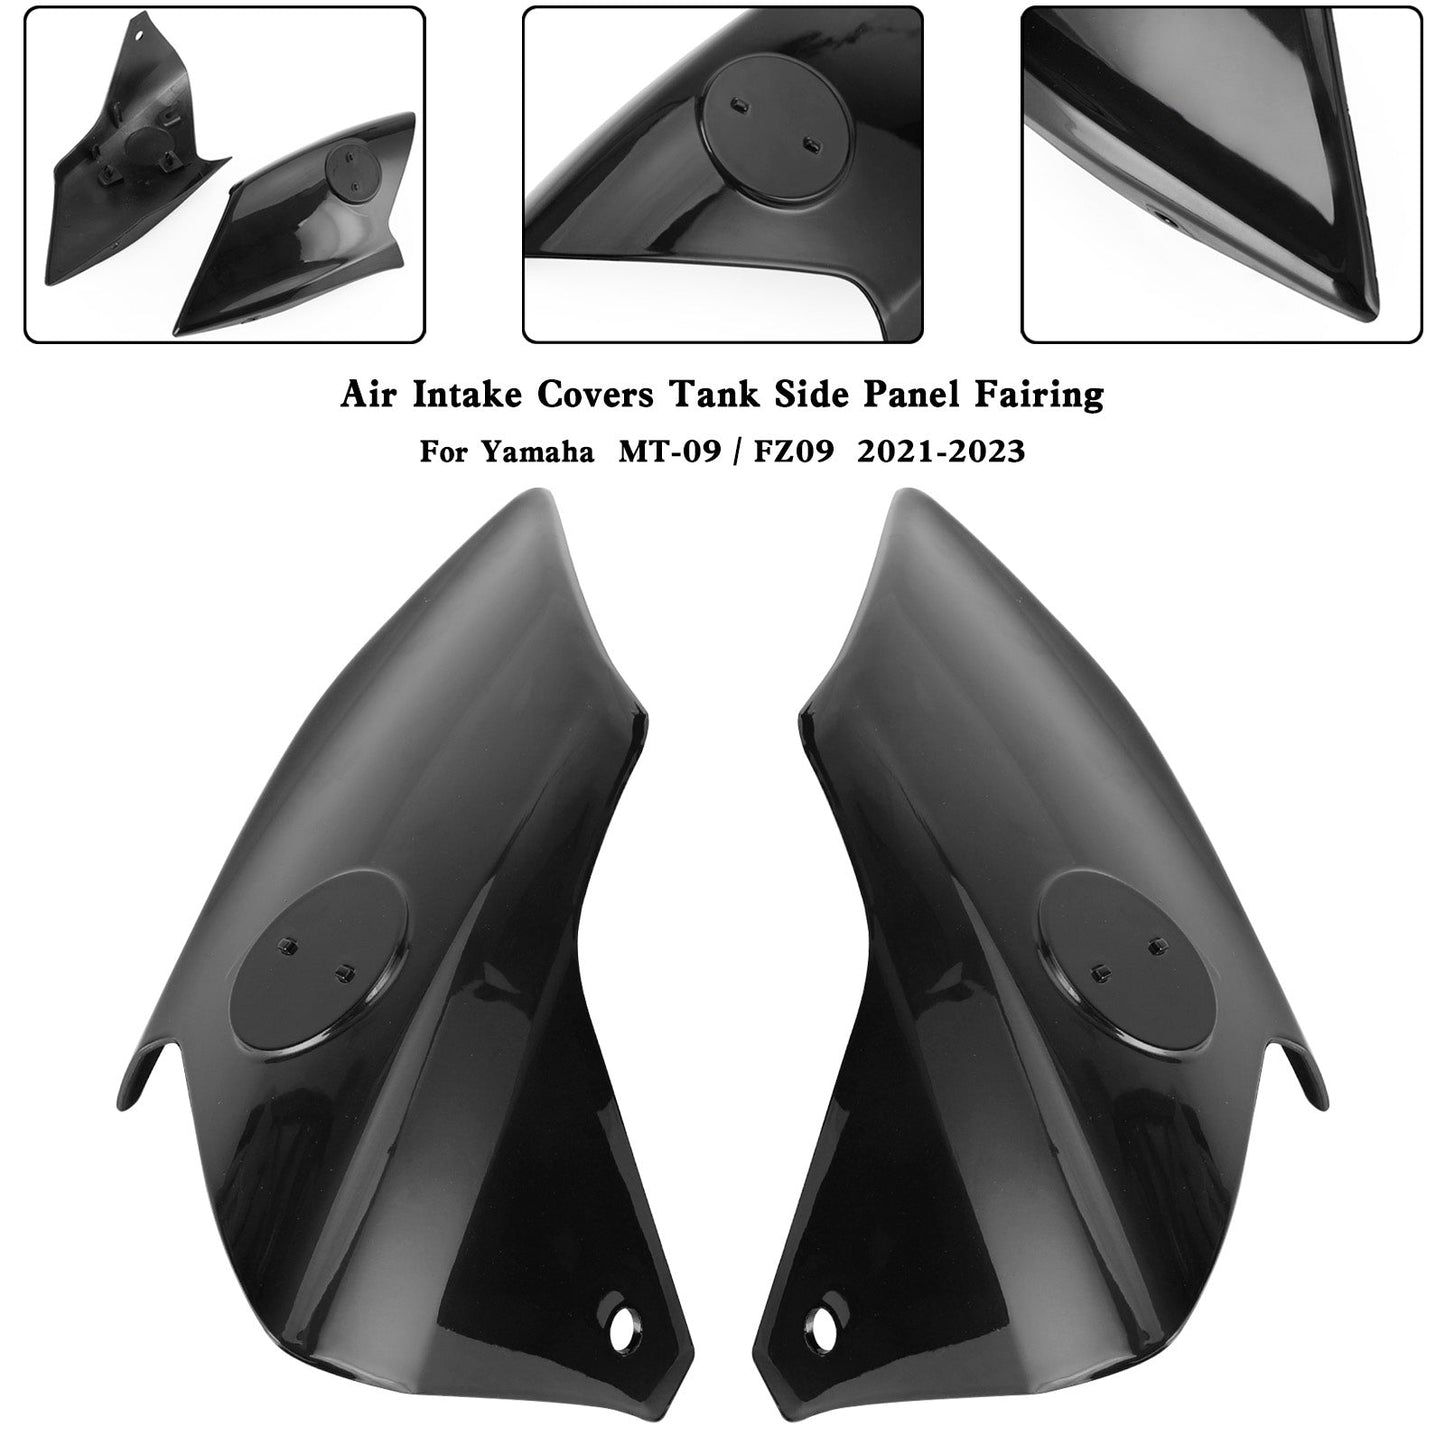 Yamaha MT-09 FZ09 2021-2023 Air Intake Covers Tank Side Panel Fairing